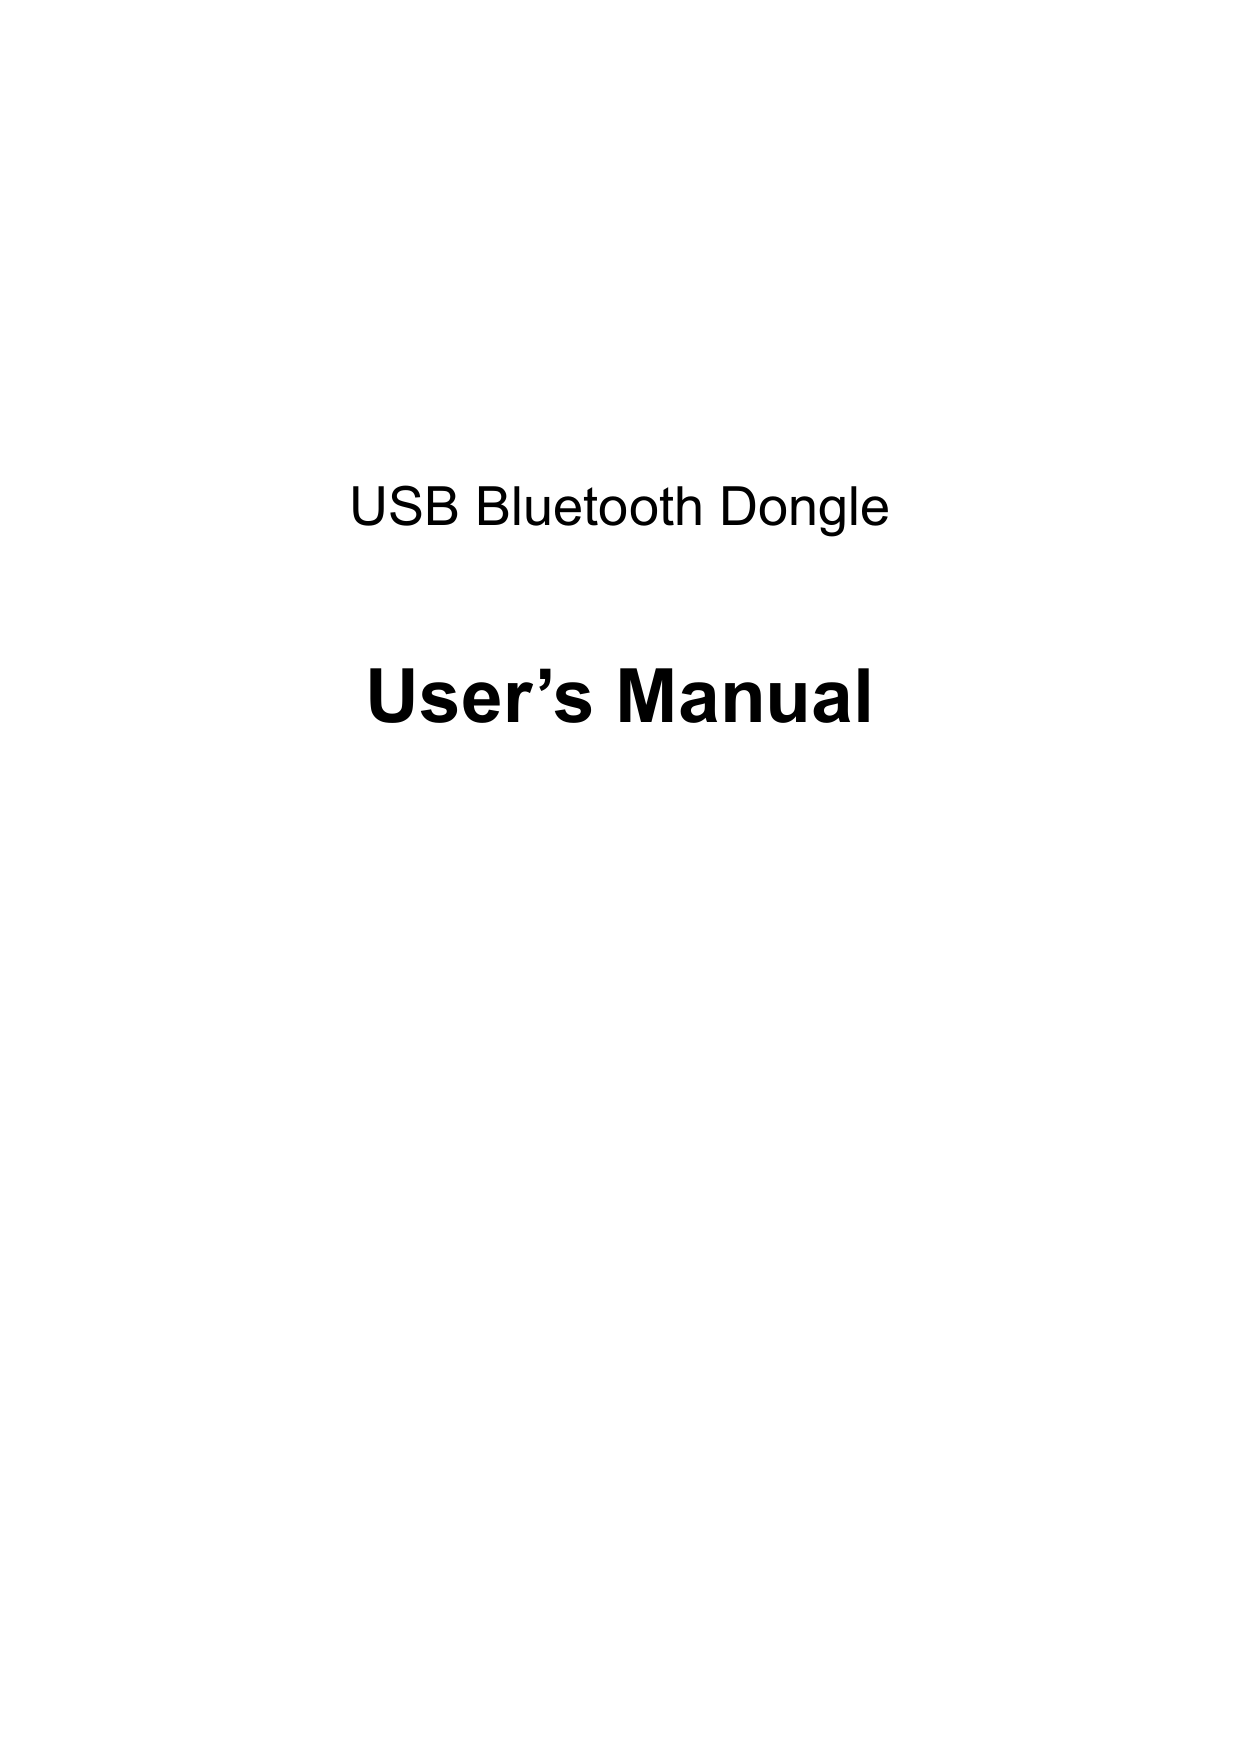     USB Bluetooth Dongle  User’s Manual   